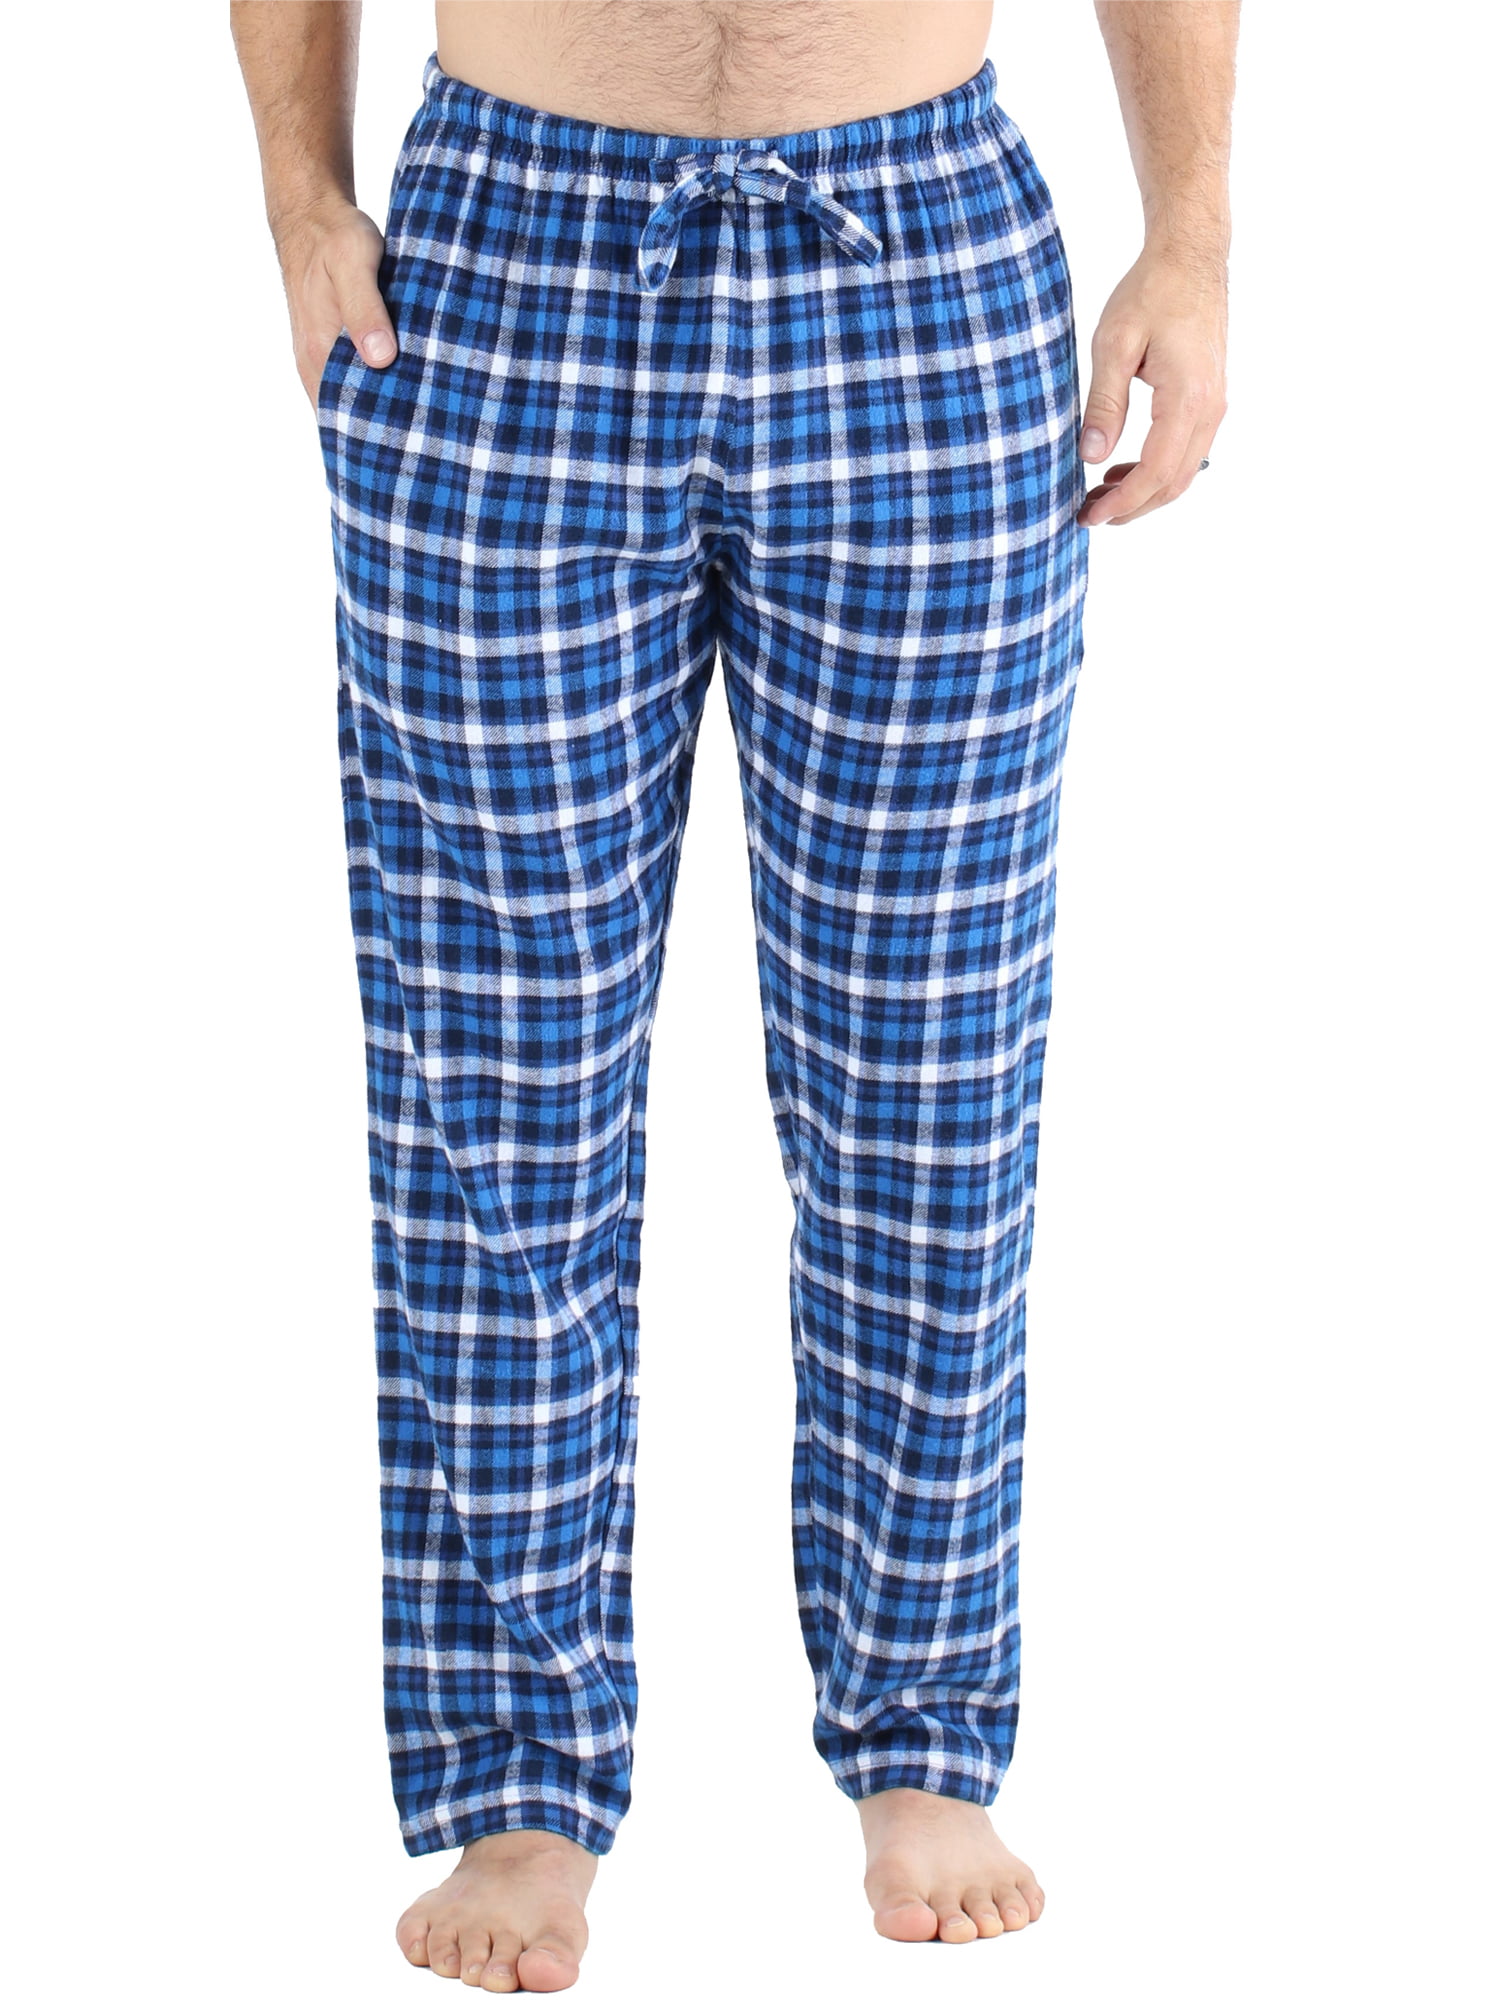 Frankie & Johnny Men's Cotton Flannel Plaid Pajama Sleep Pants ...